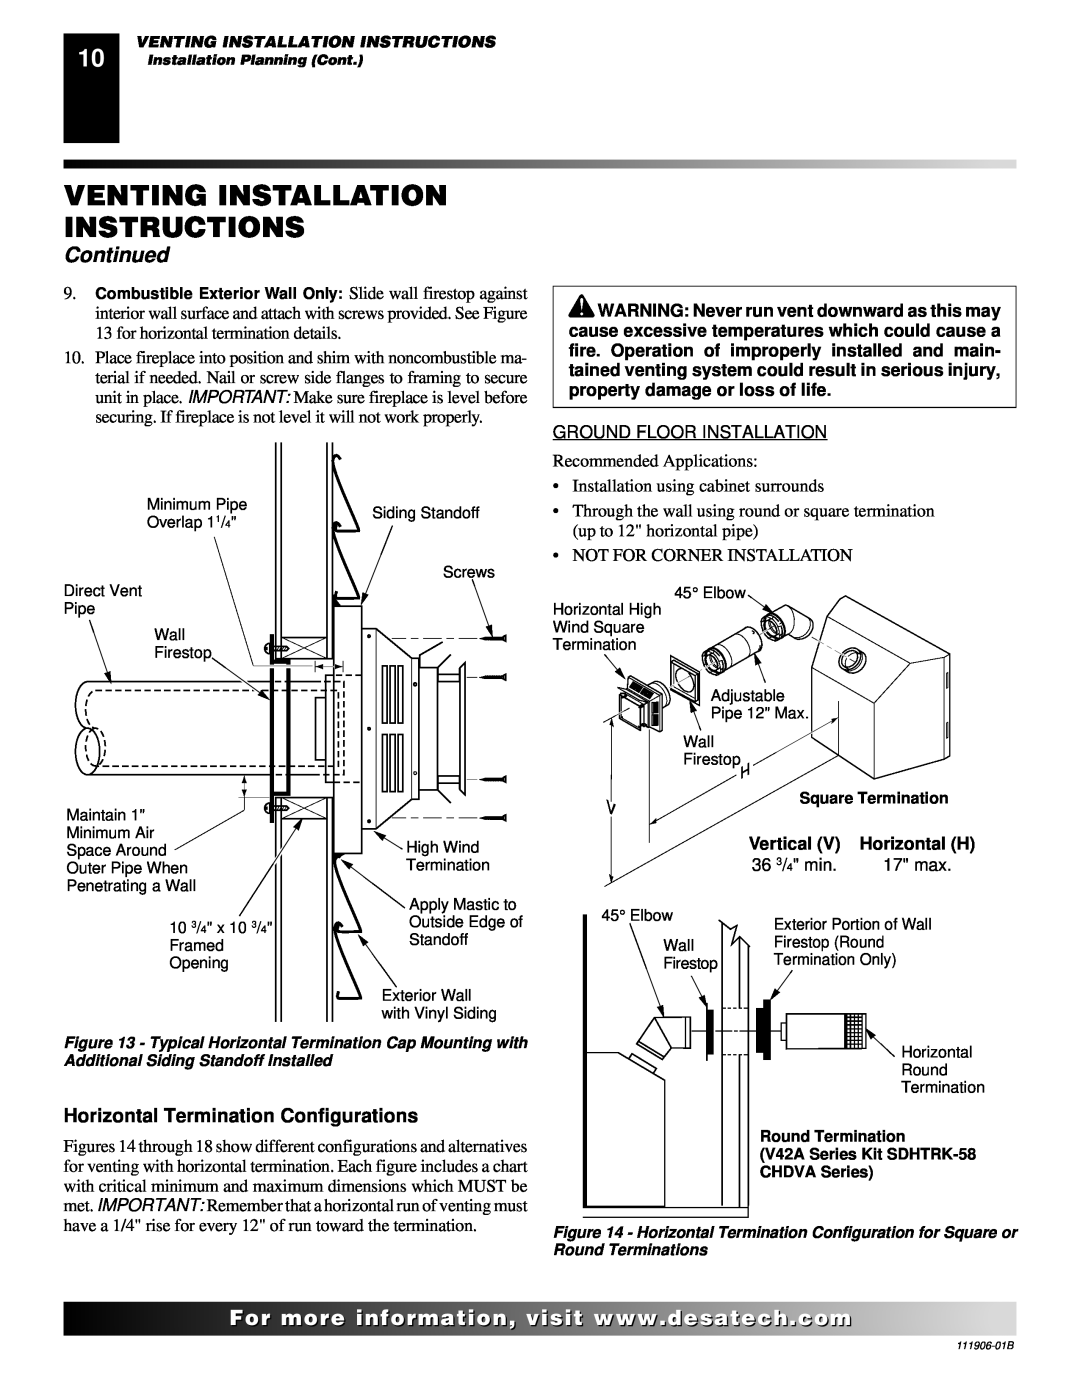 Desa (V)V42PA(1), CHDV42NRA Venting Installation Instructions, Continued, Square Termination, Vertical, CHDVA Series 